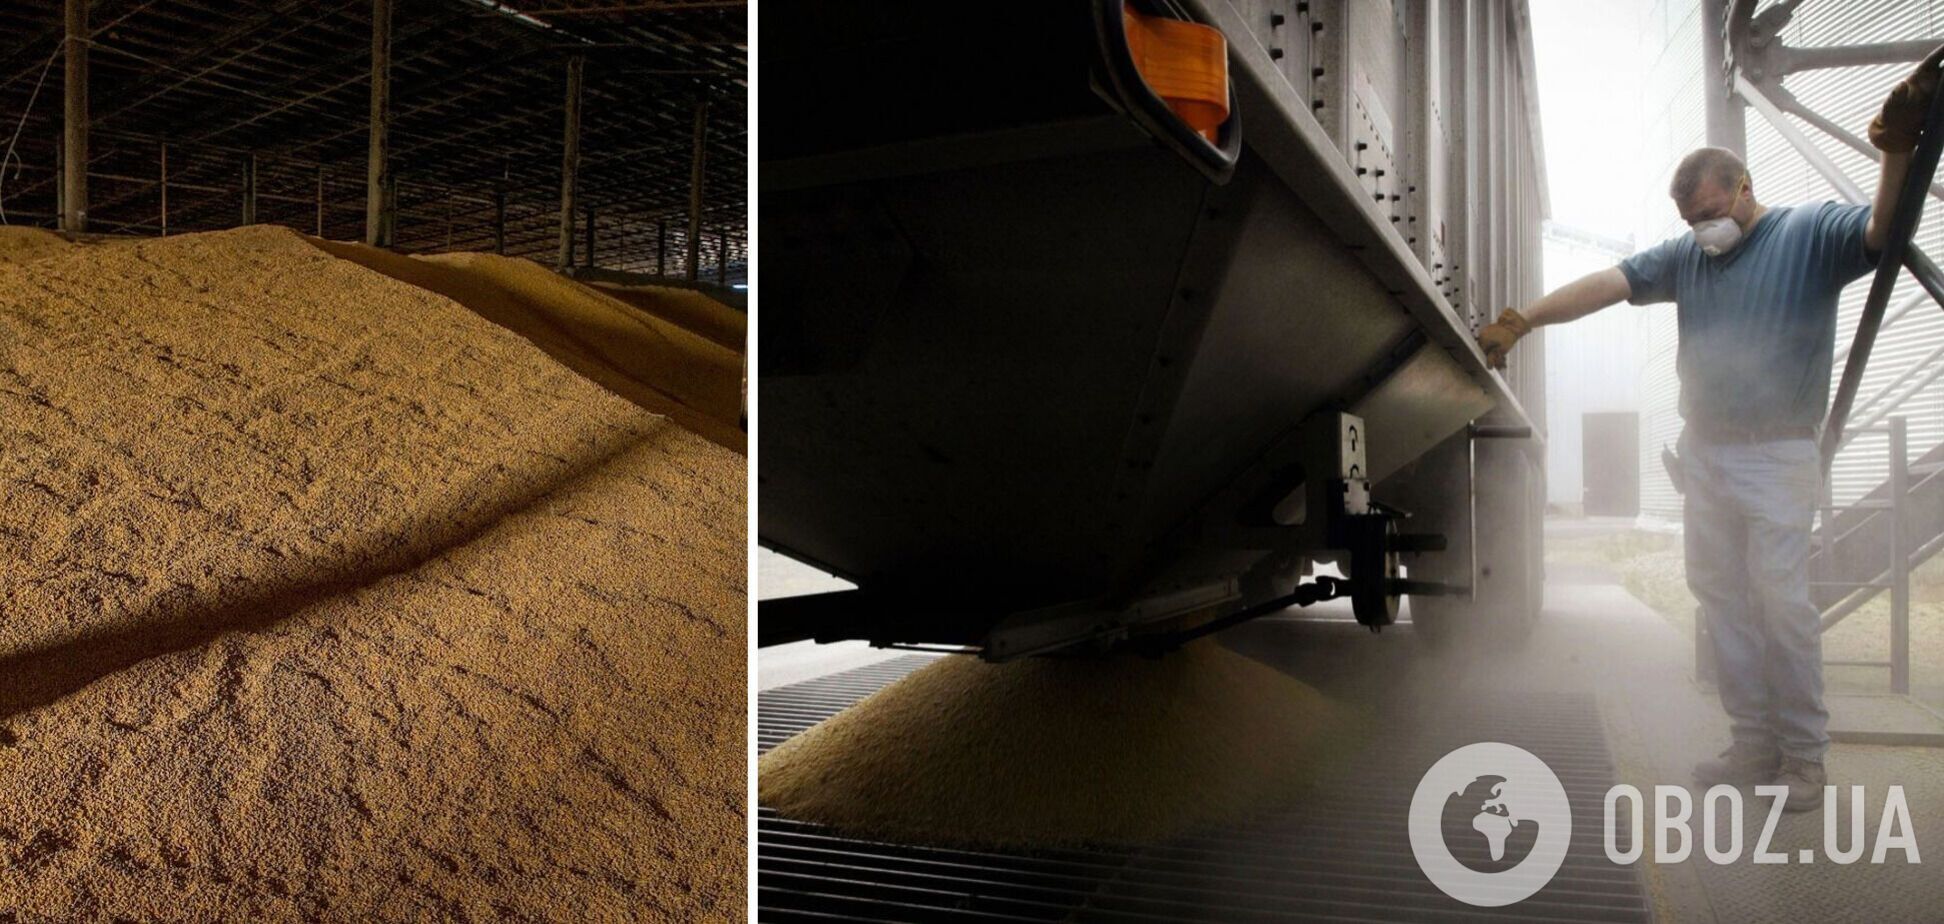 Україна експортує зерно лише сушею